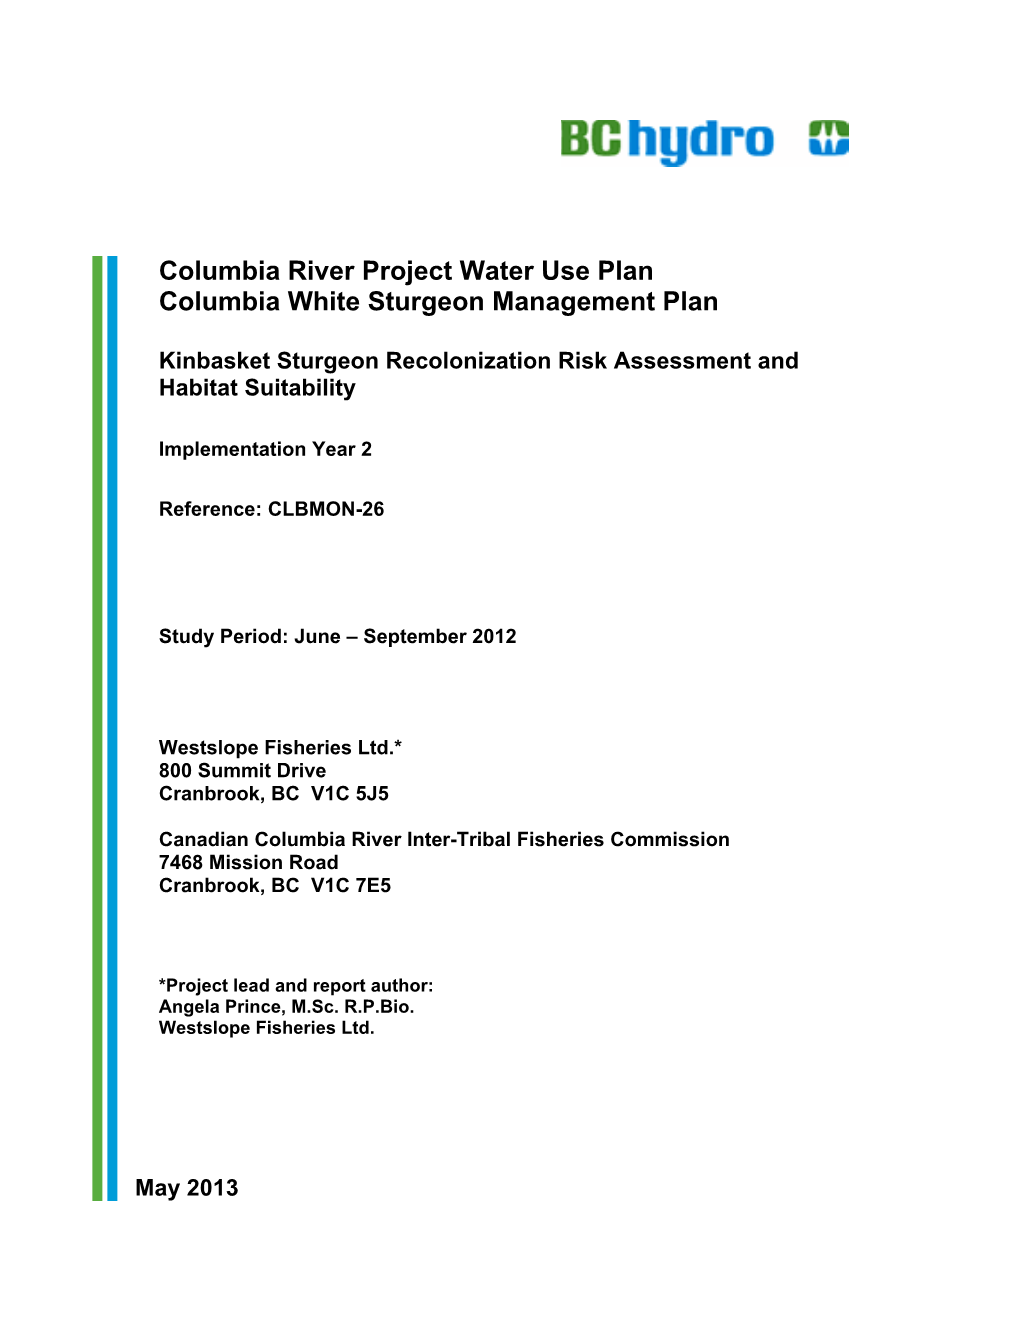 May 2013 Kinbasket Reservoir Sturgeon Recolonization Habitat Assessment 2012 (Year 2)